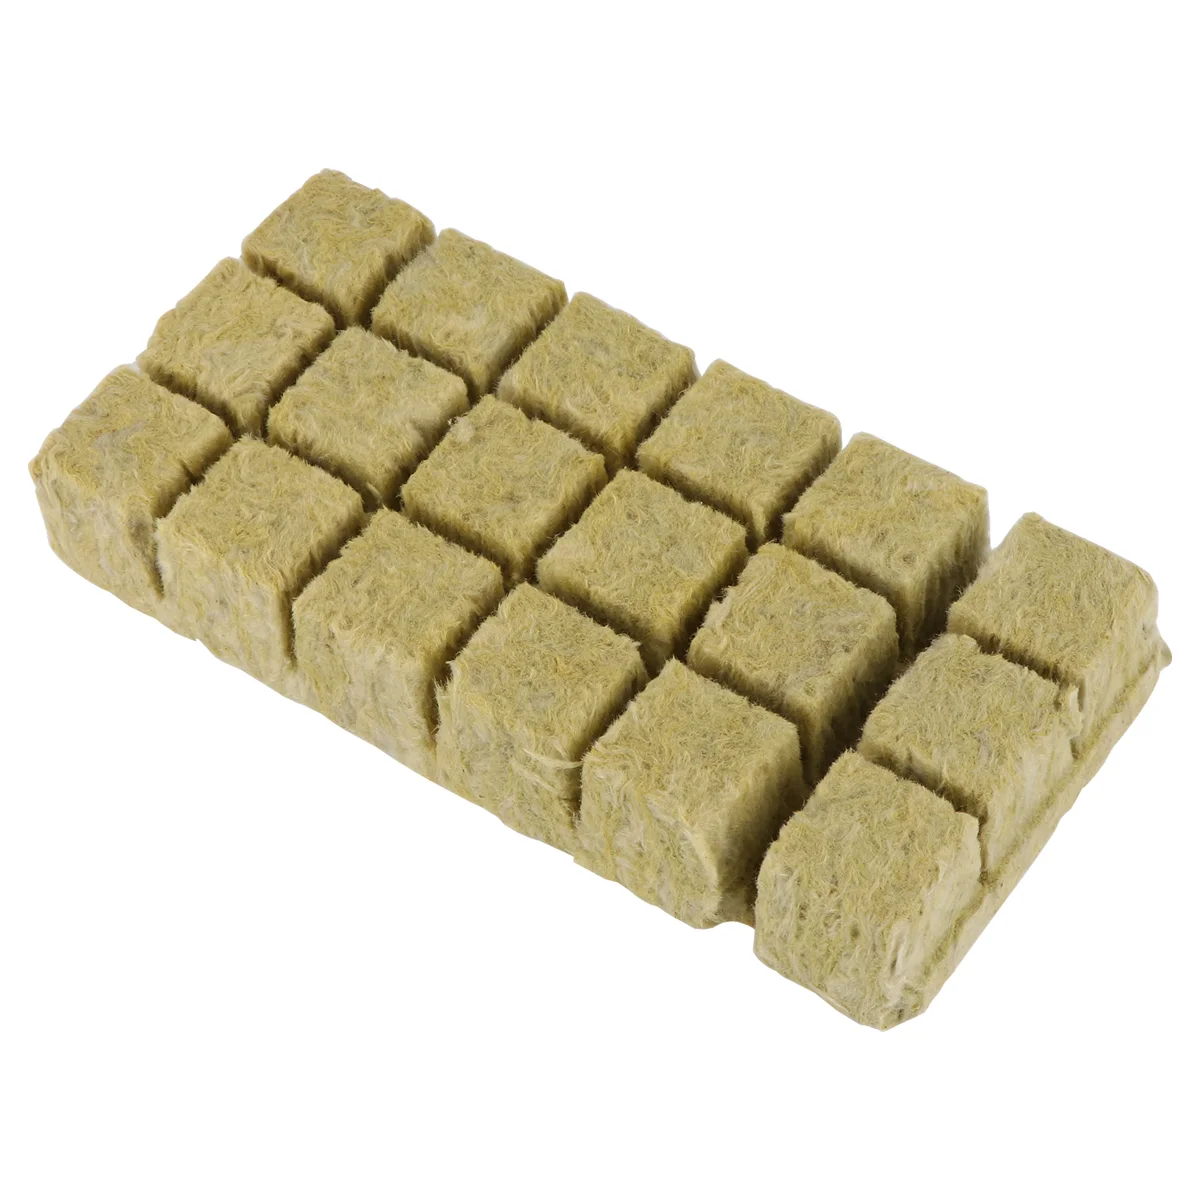 

Cubes Starter Hydroponic Grow Sheets Propagation Plugs Planting Hydroponics Block Stonewool Wool Cube Mini Sponge Growing Media